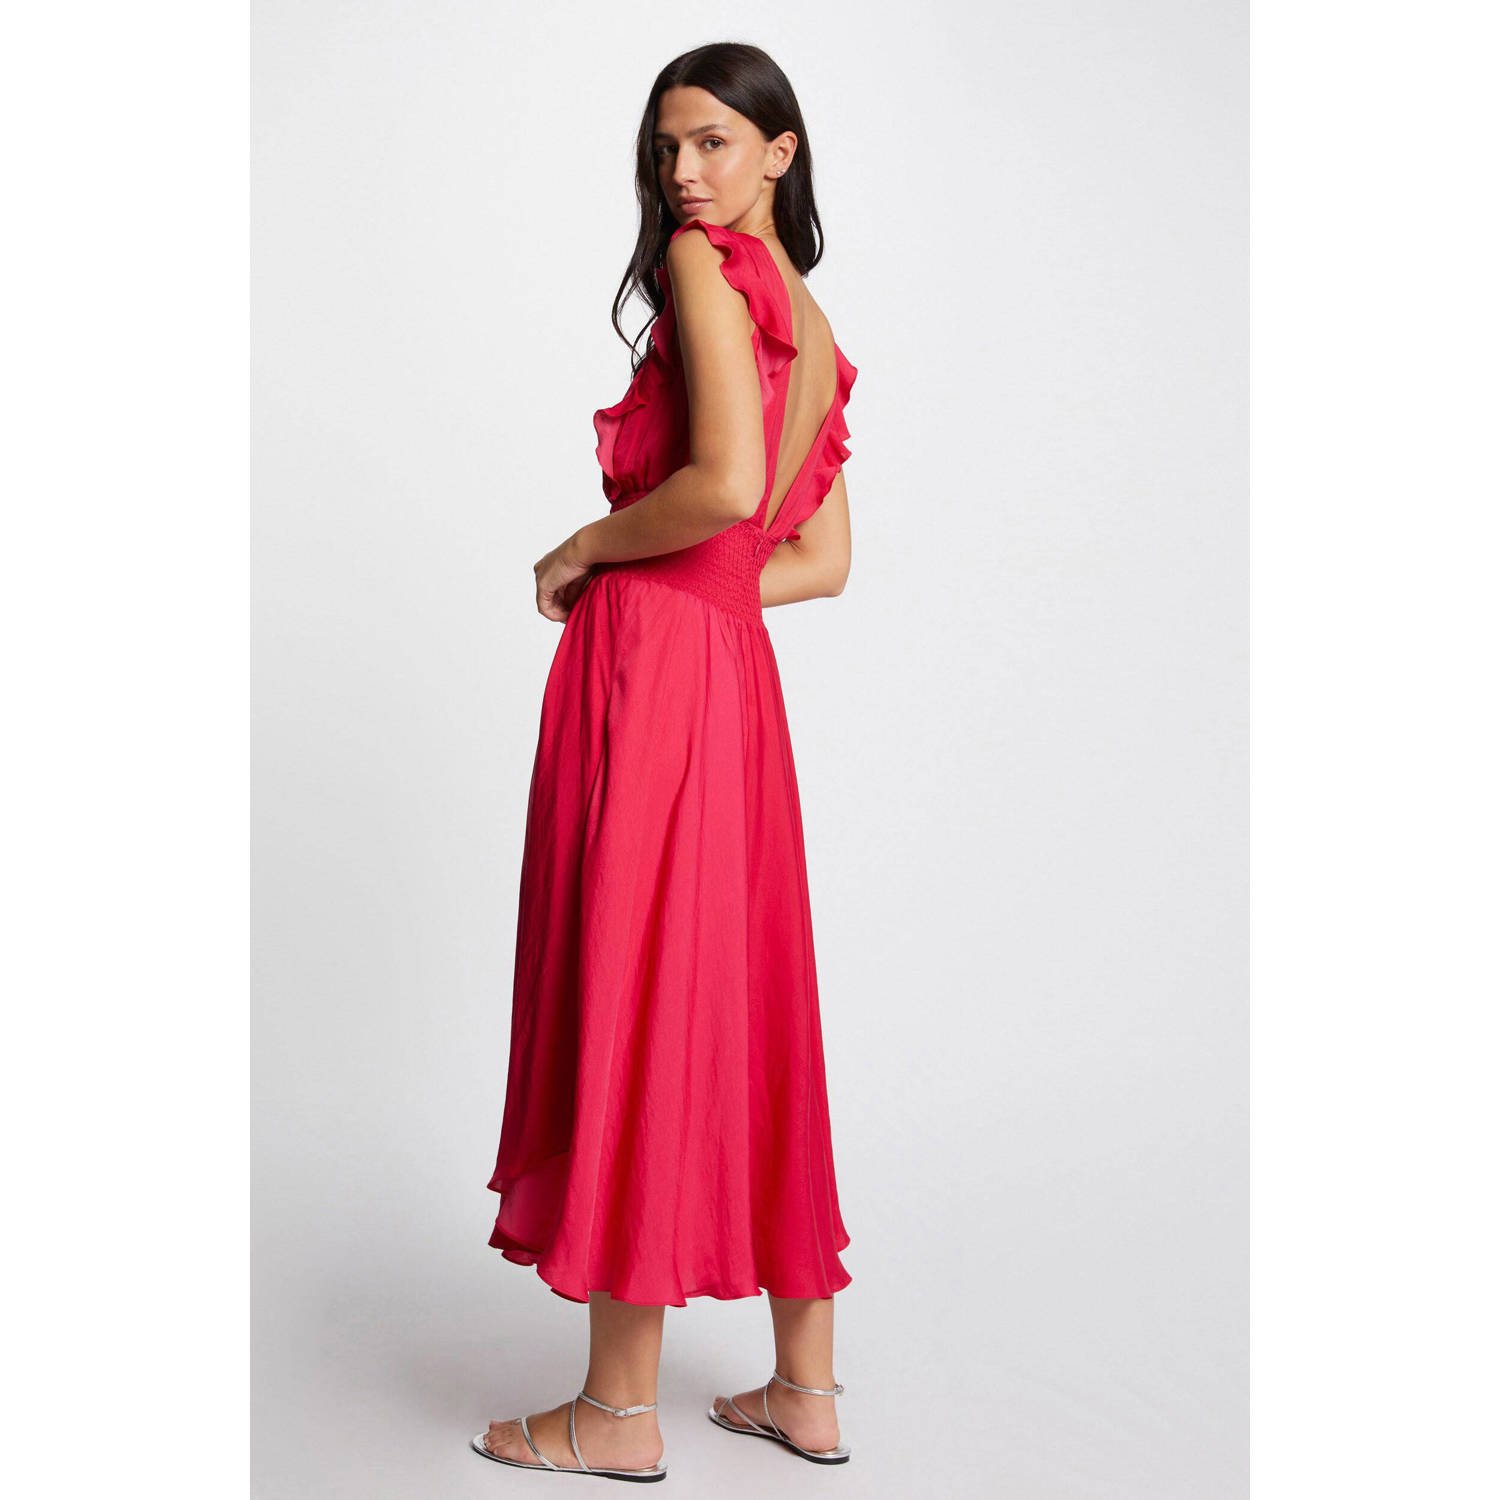 Morgan jurk met open rug fuchsia rood